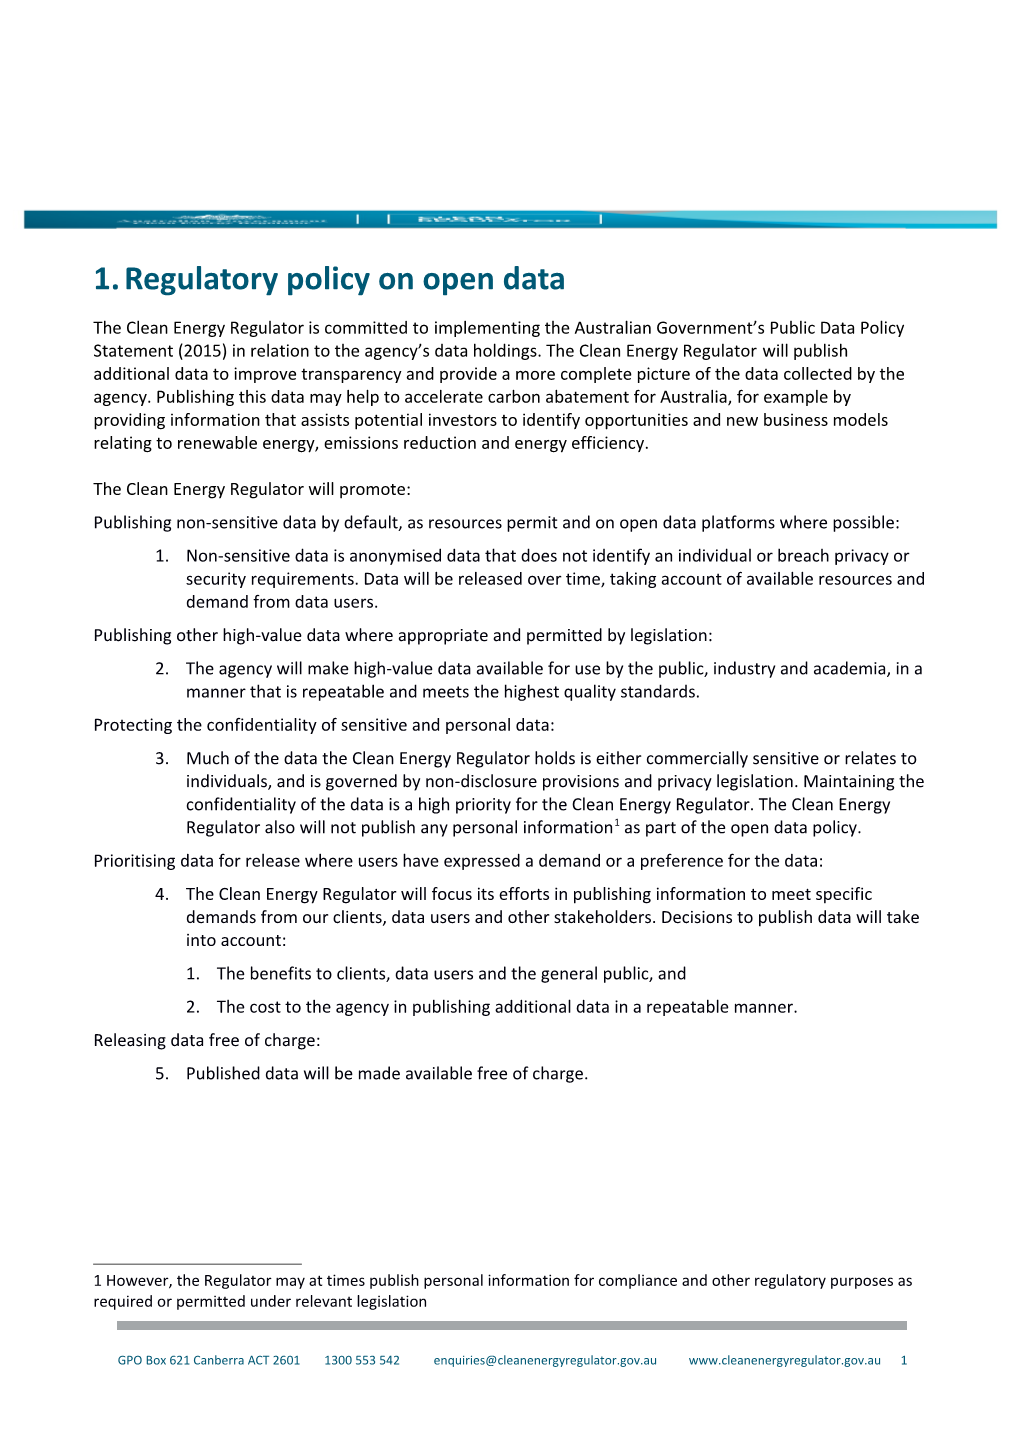 Regulatory Policy on Open Data